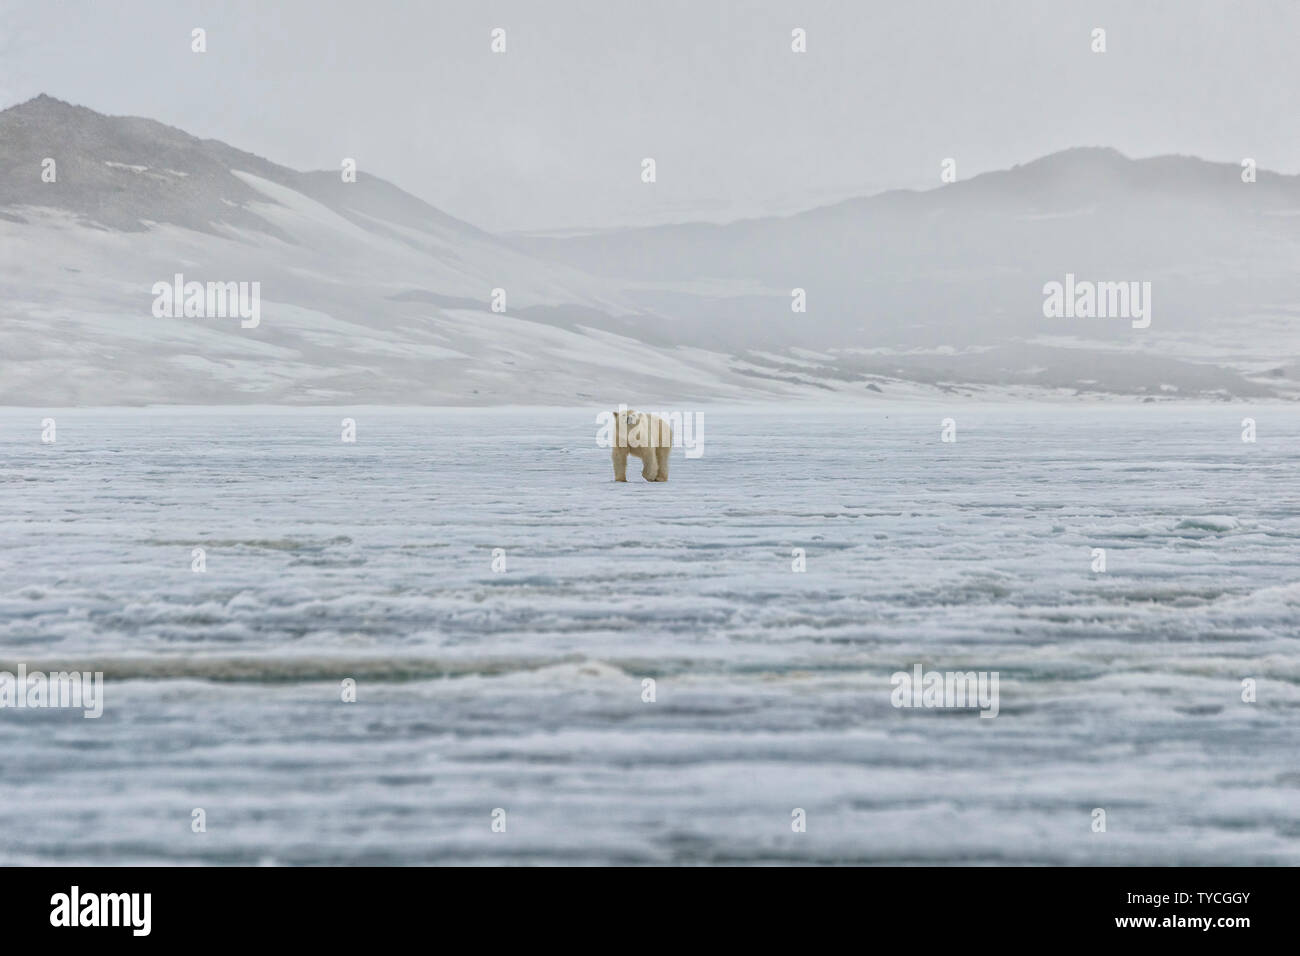 Female polar bear (Ursus maritimus) walking on ice floe, Bjoernsundet, Hinlopen Strait, Spitsbergen Island, Svalbard Archipelago, Norway Stock Photo